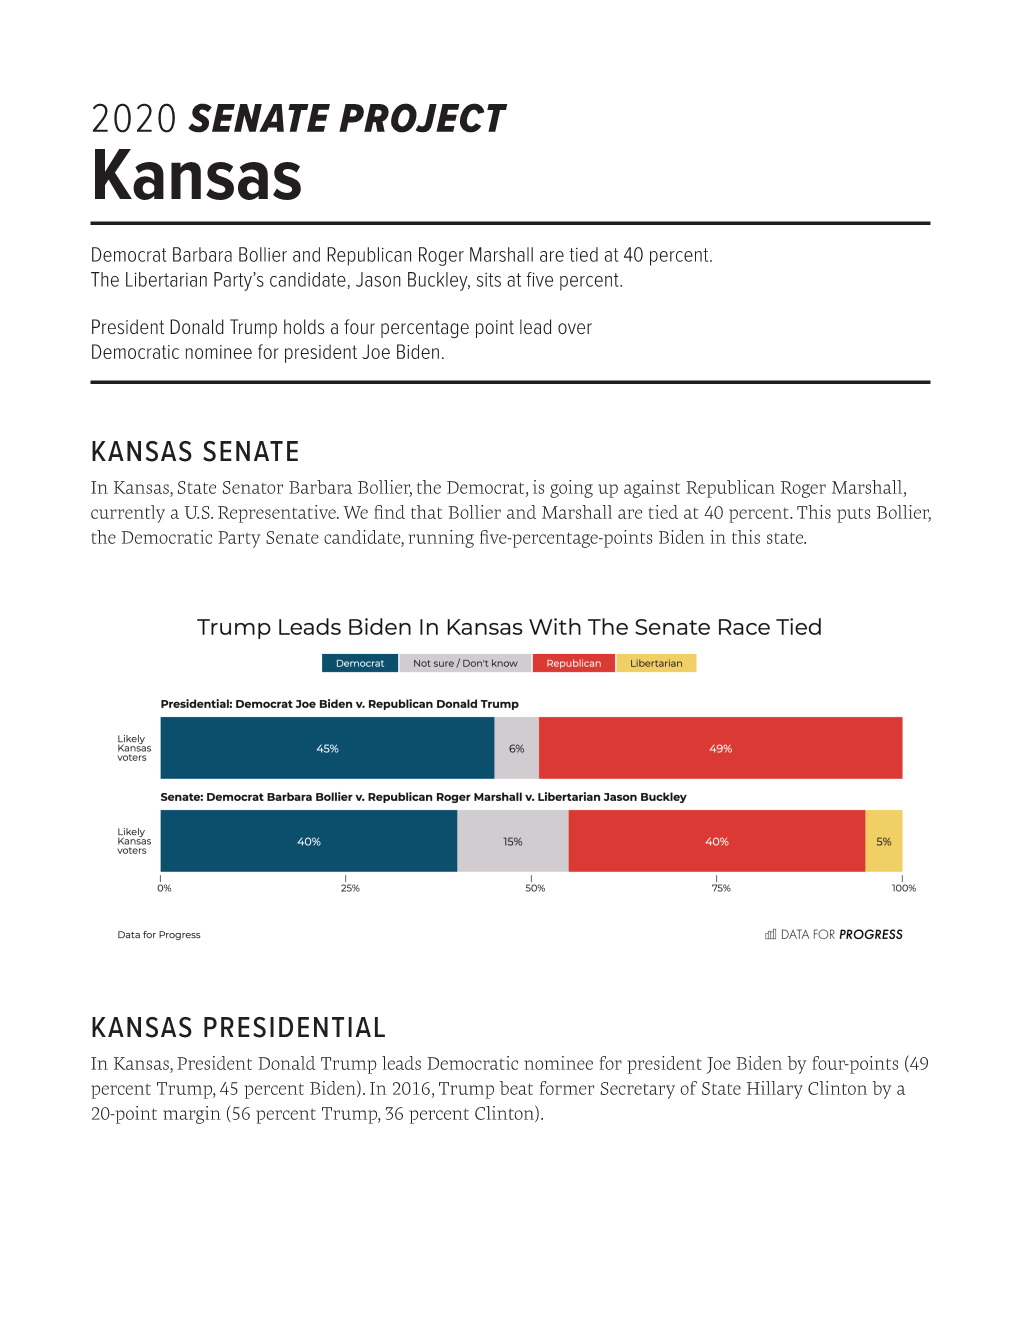 Kansas Democrat Barbara Bollier and Republican Roger Marshall Are Tied at 40 Percent